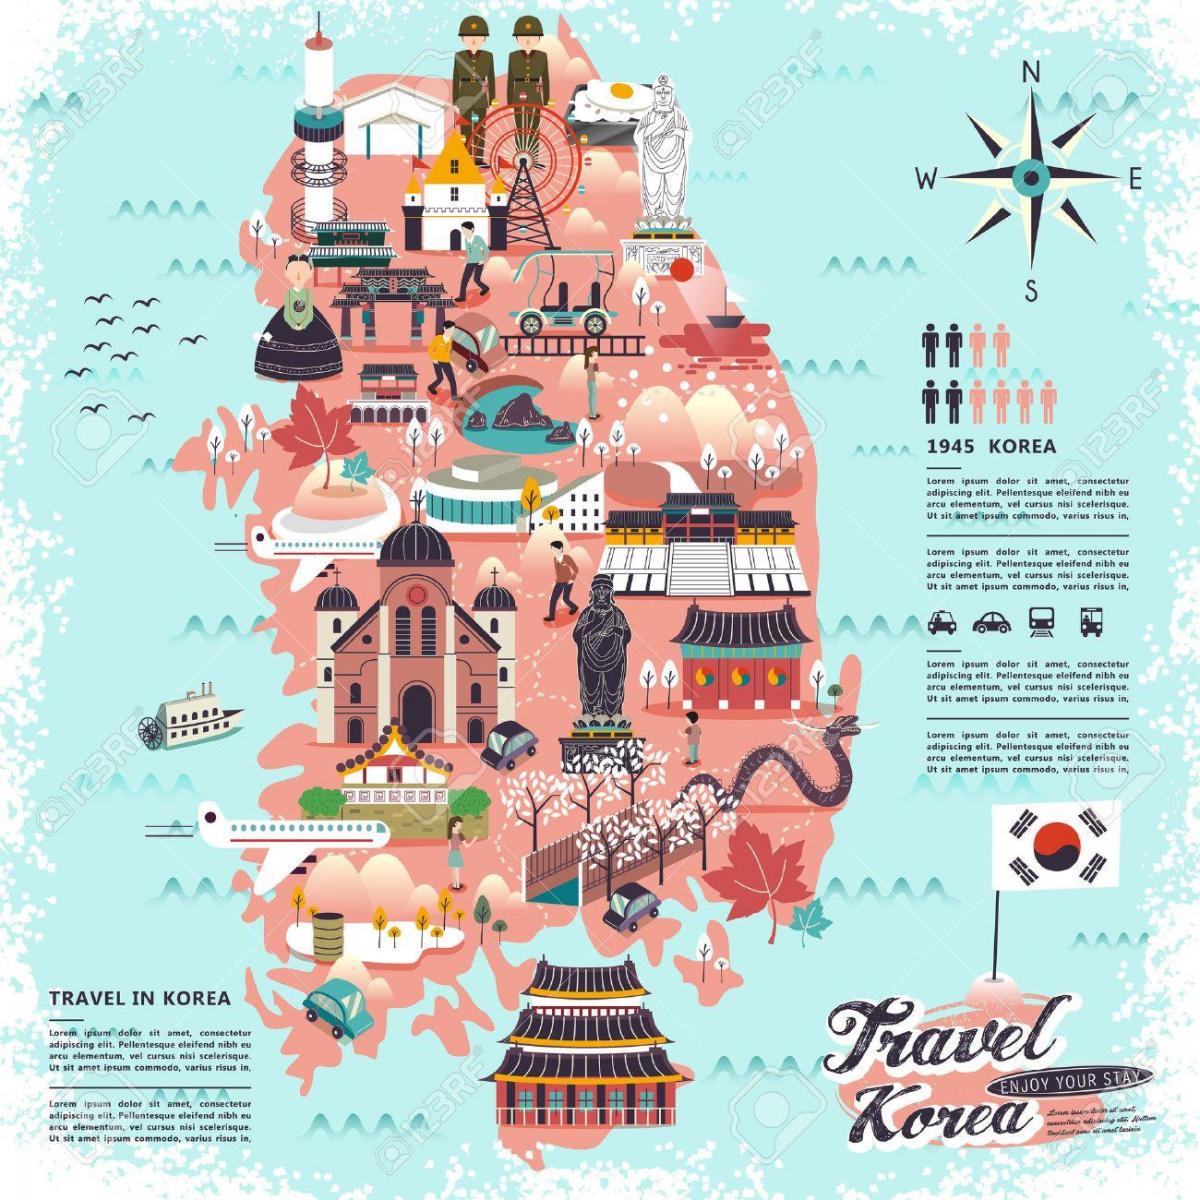 Carte de voyage de la Corée du Sud (ROK)